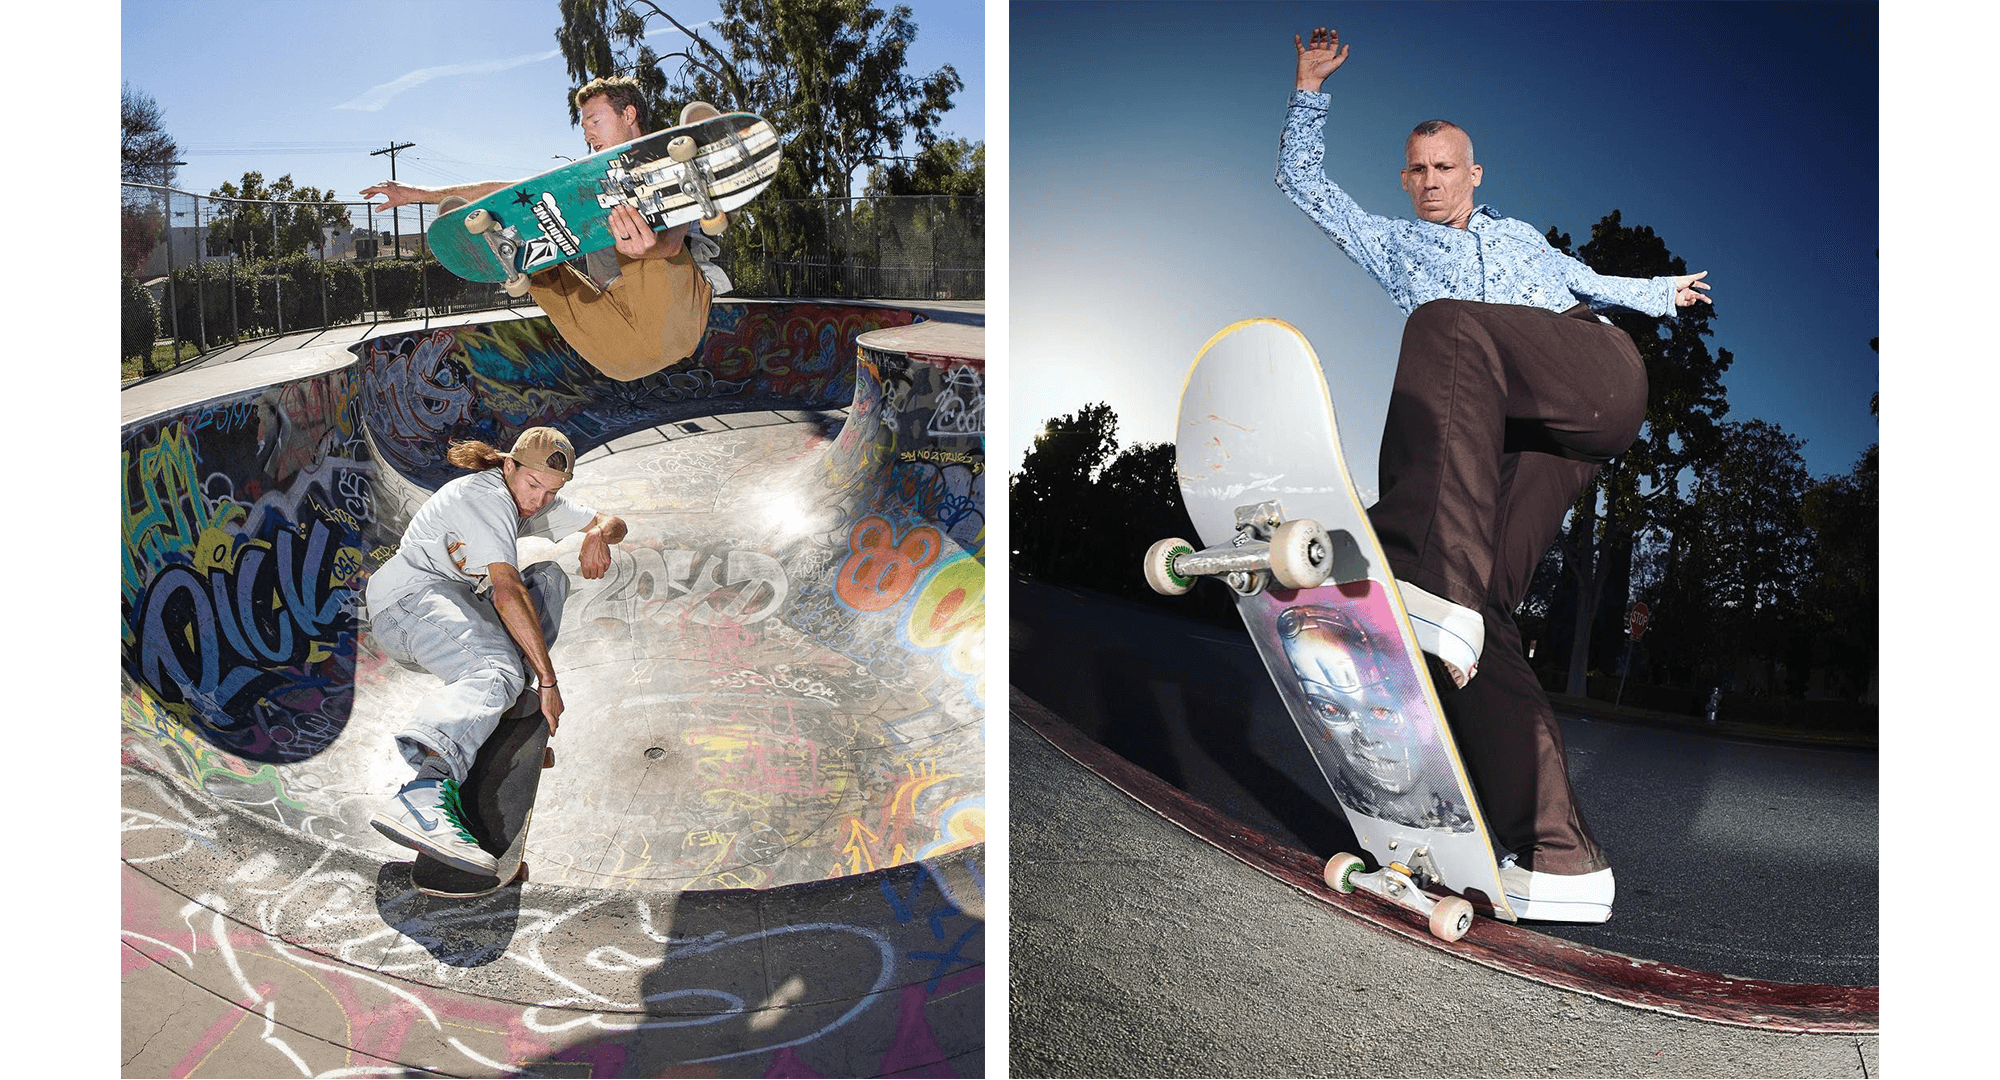 photo of Oskar Rozenberg for Thrasher Magazine and photo of Jason Dill doing a back heel skateboard trick by Michael Schmelling